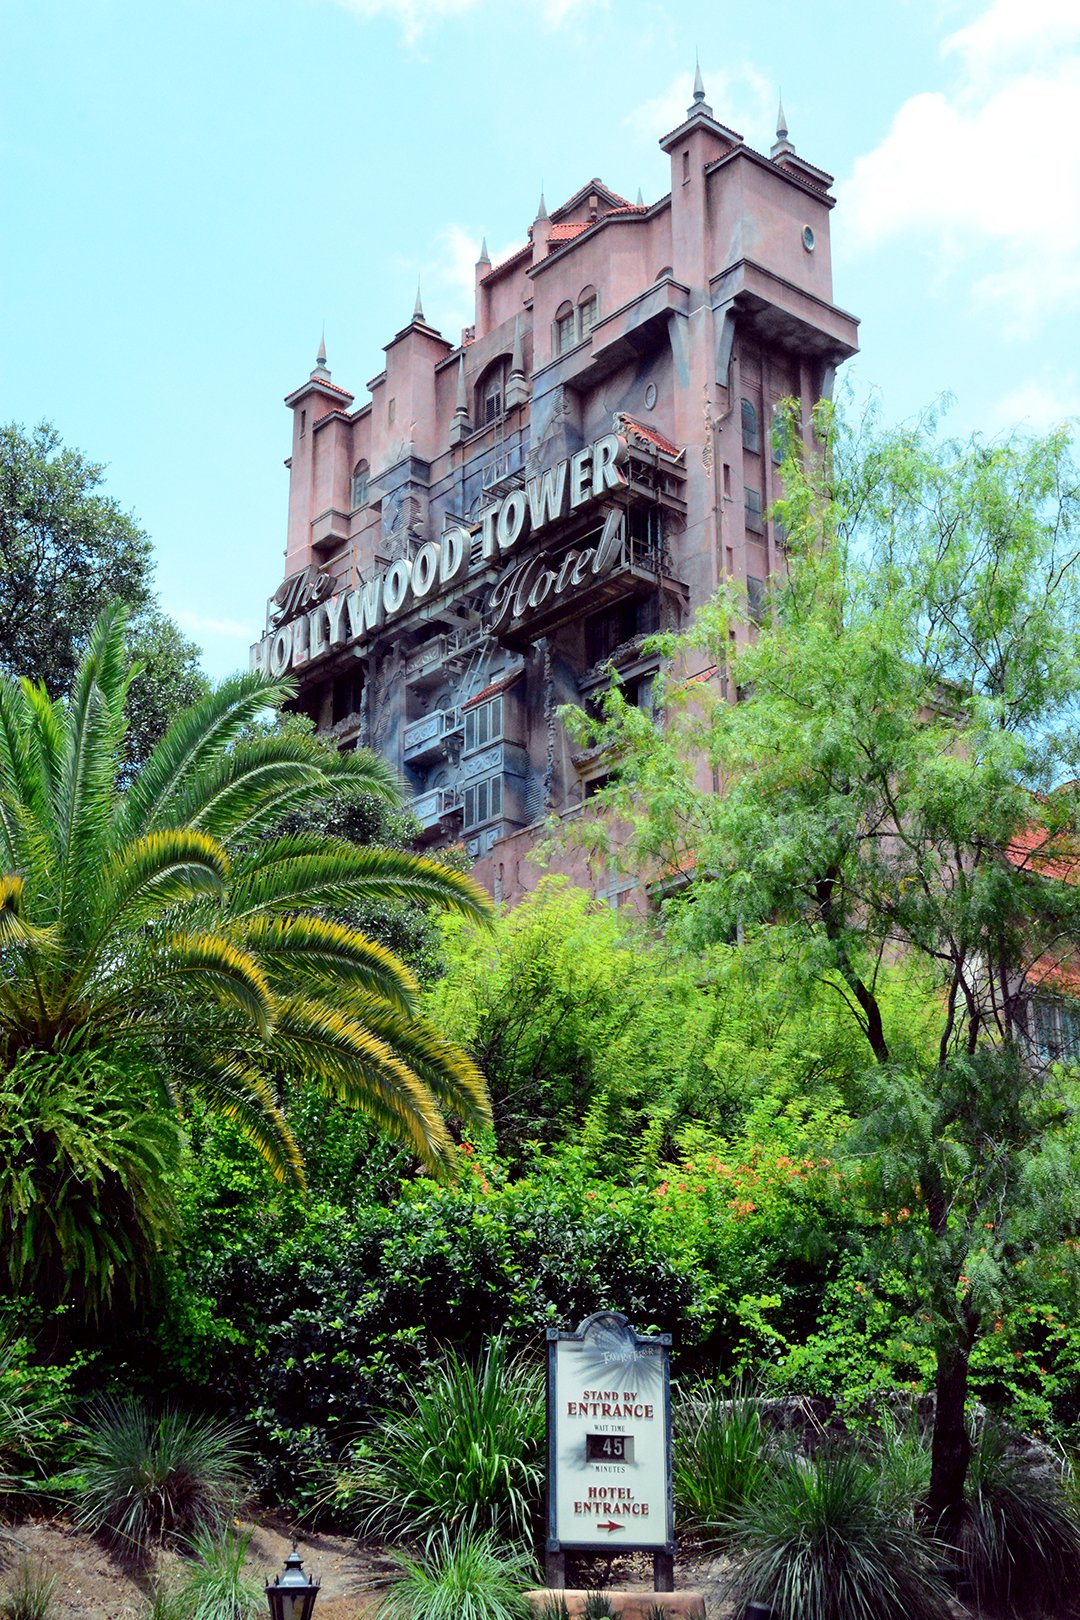 Disney's Hollywood Studios Tower of Terror